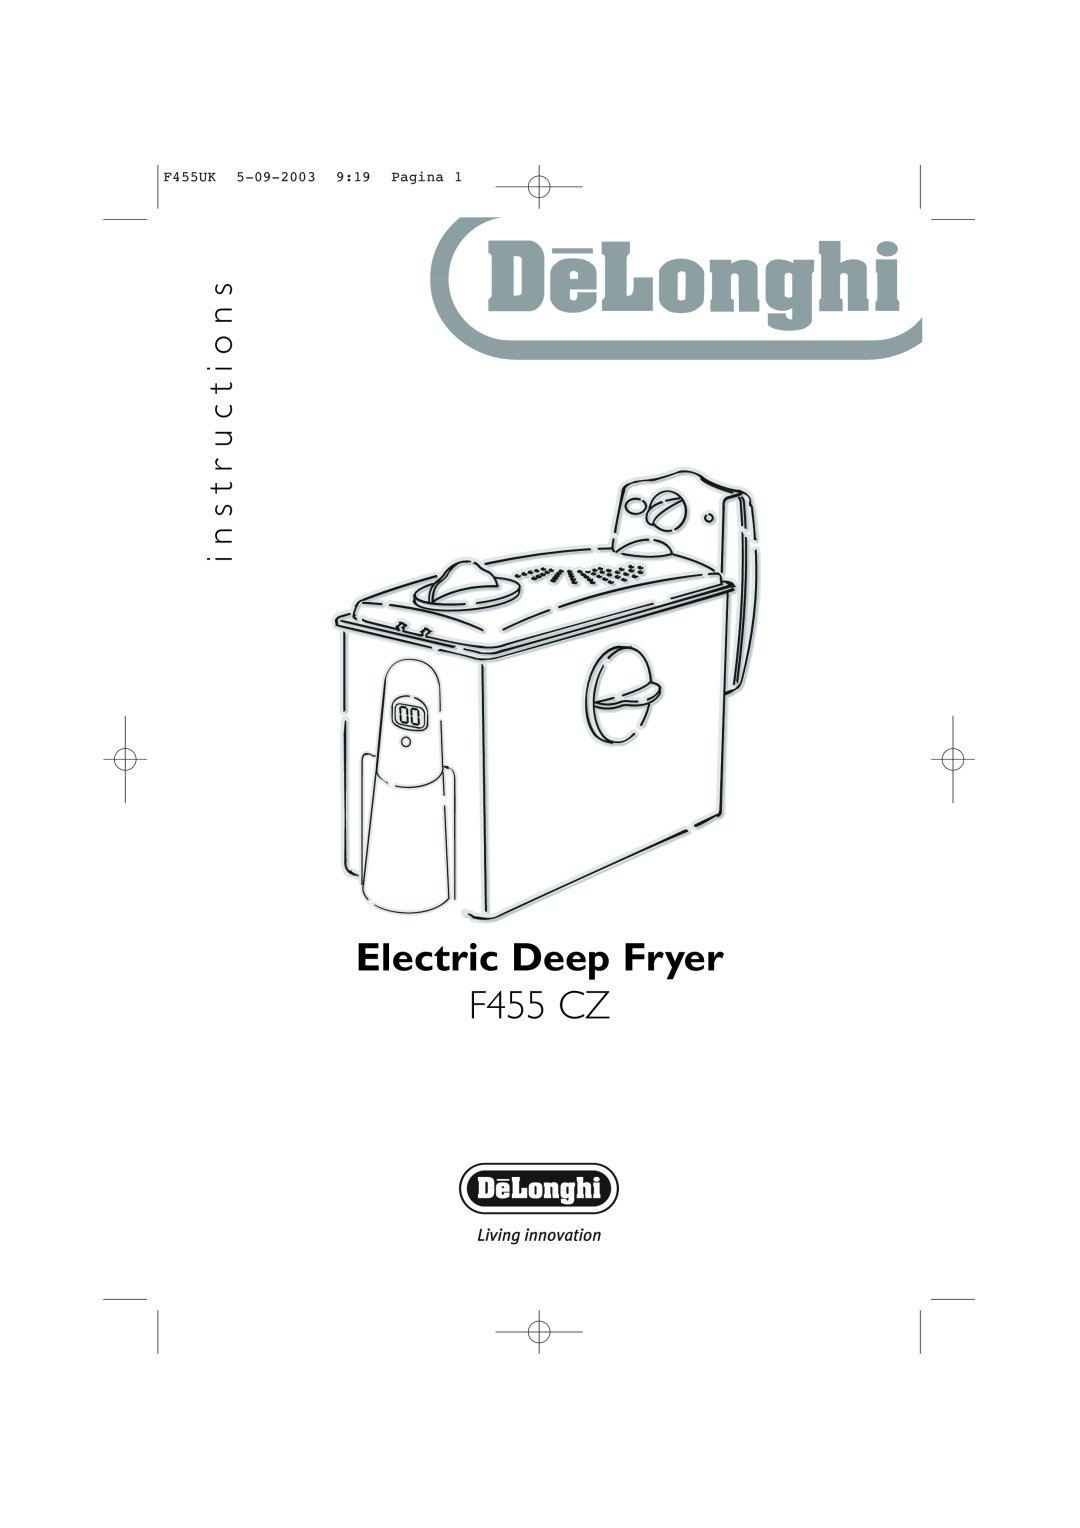 DeLonghi F455 CZ manual Electric Deep Fryer, i n s t r u c t i o n s, F455UK 5-09-20039 19 Pagina 